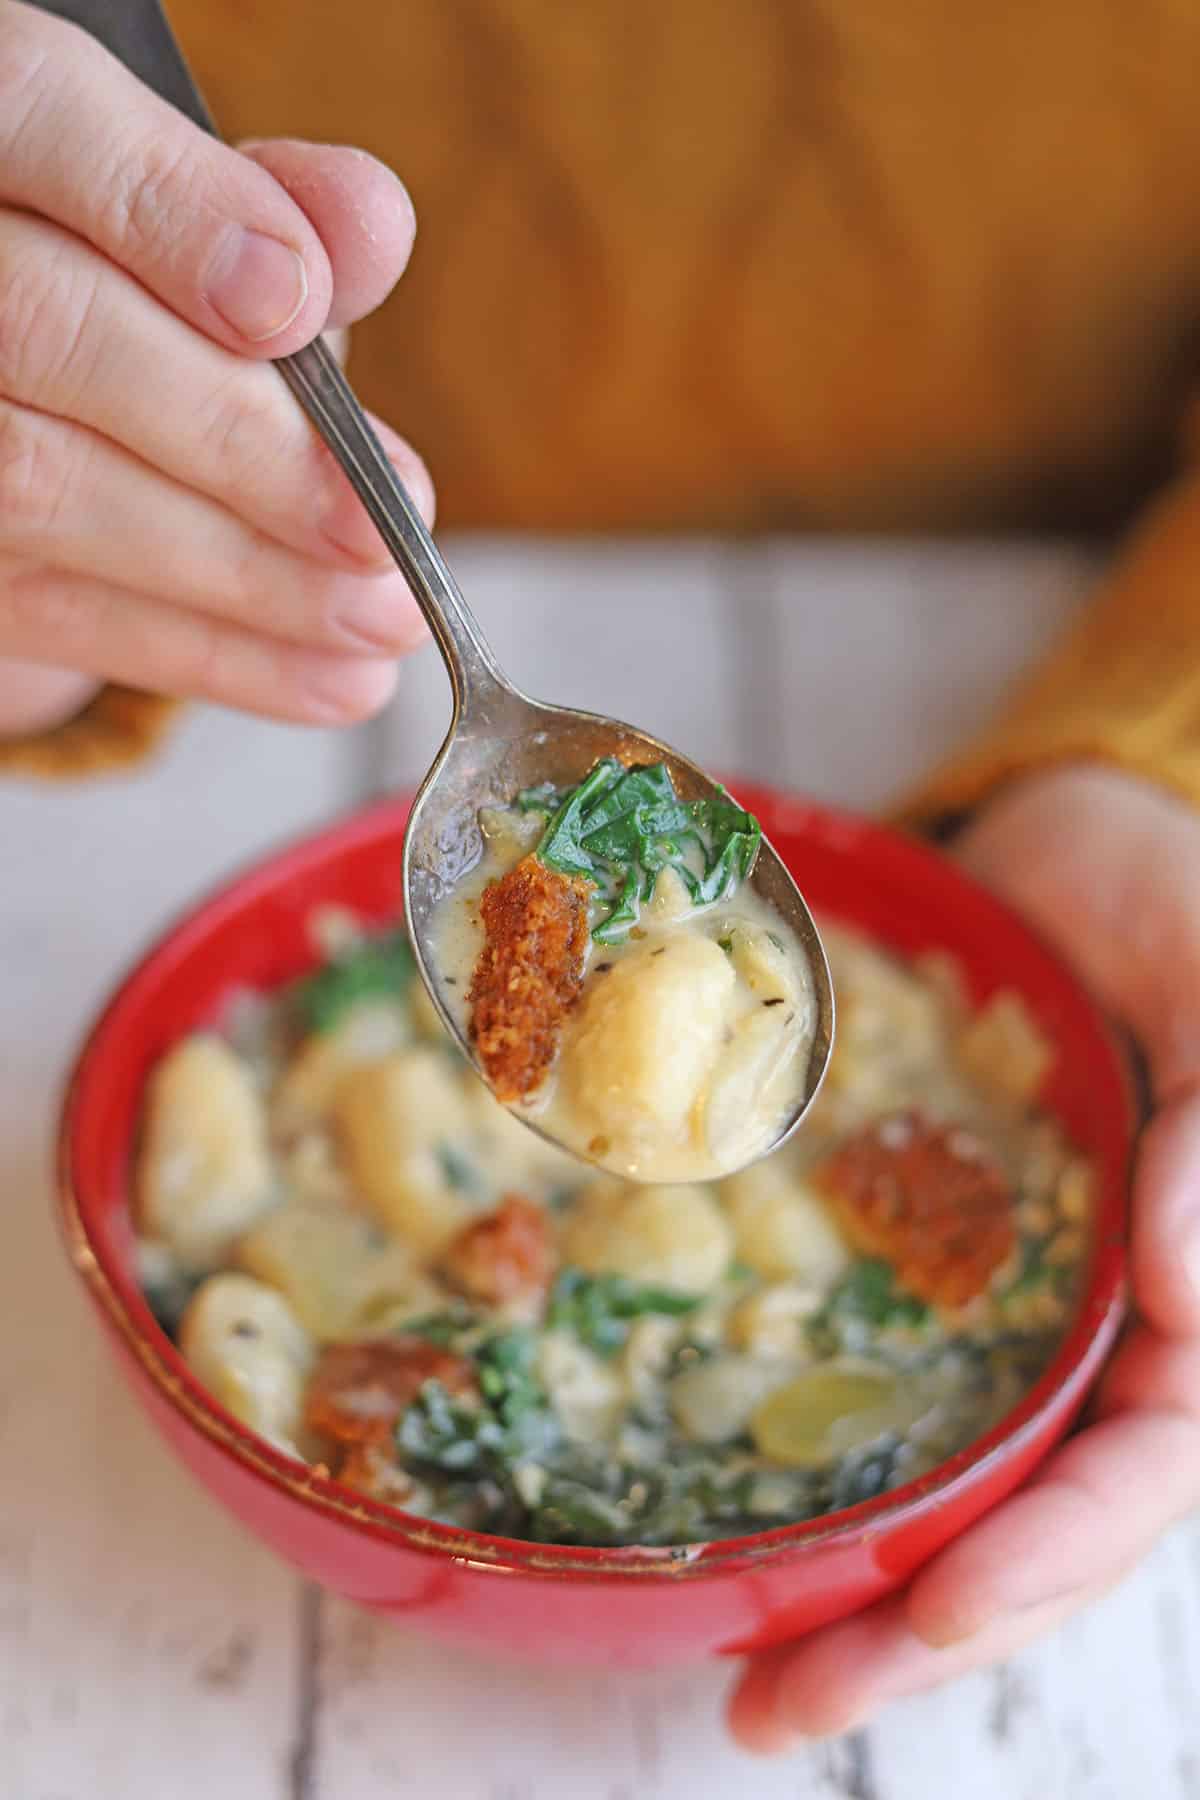 Spoon holding vegan gnocchi soup.